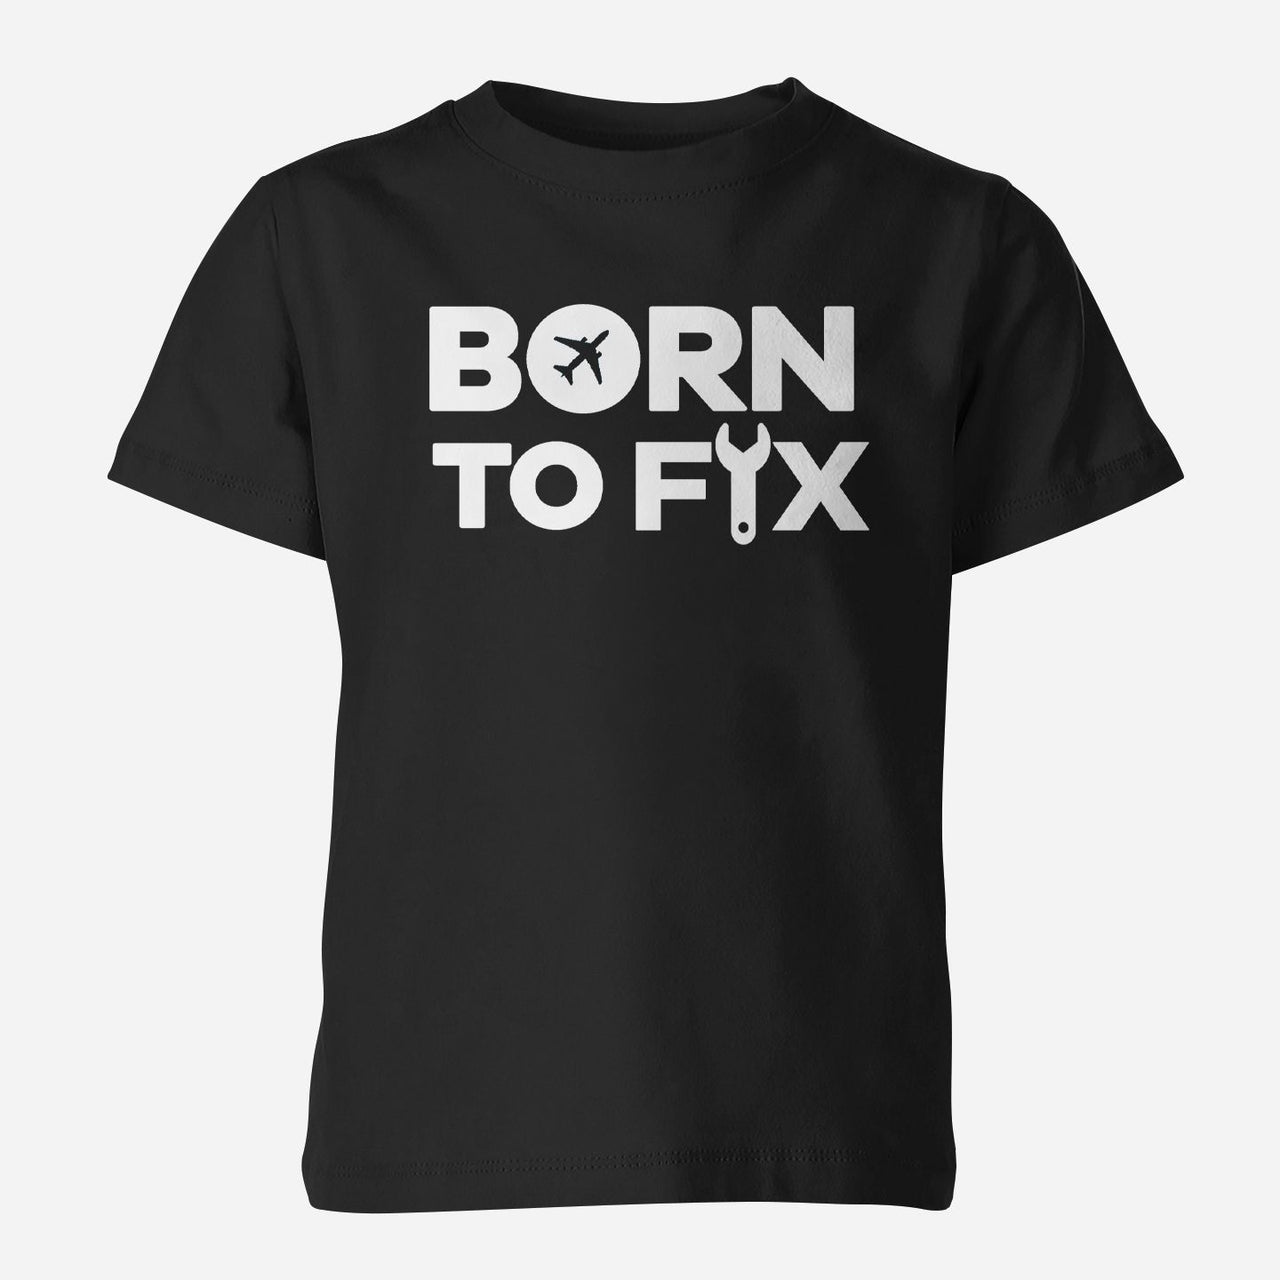 Born To Fix Airplanes Designed Children T-Shirts